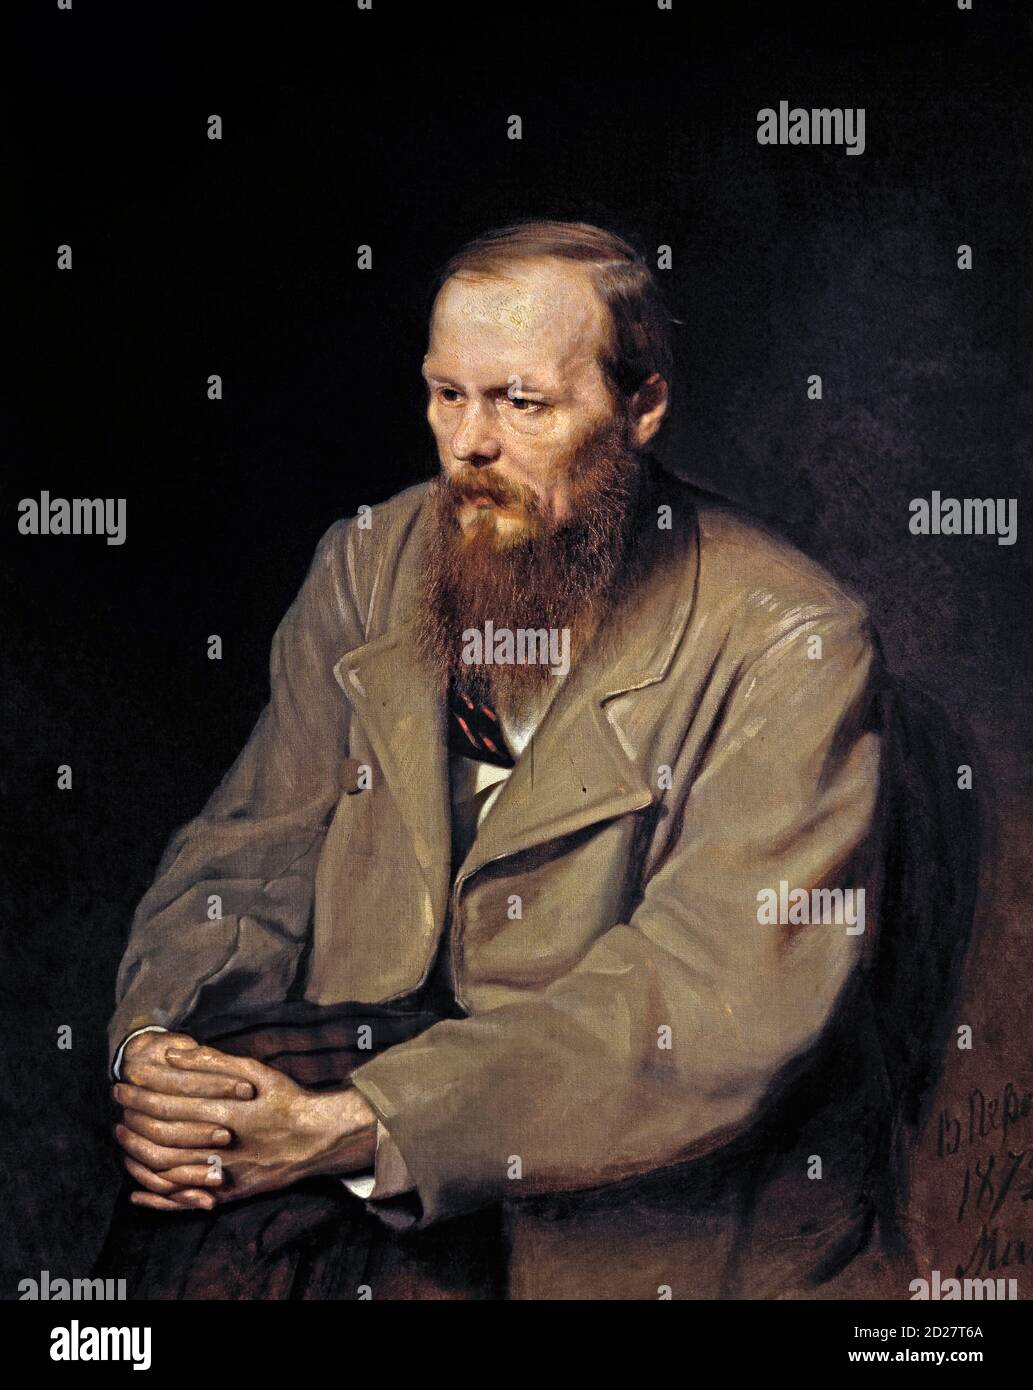 Dostoevsky. Portrait of the Russian writer, Fyodor Mikhailovich Dostoevsky (1821-1881) by Vasily Perov, oil on canvas, 1872. Fedor Dostoyevsky. Stock Photo